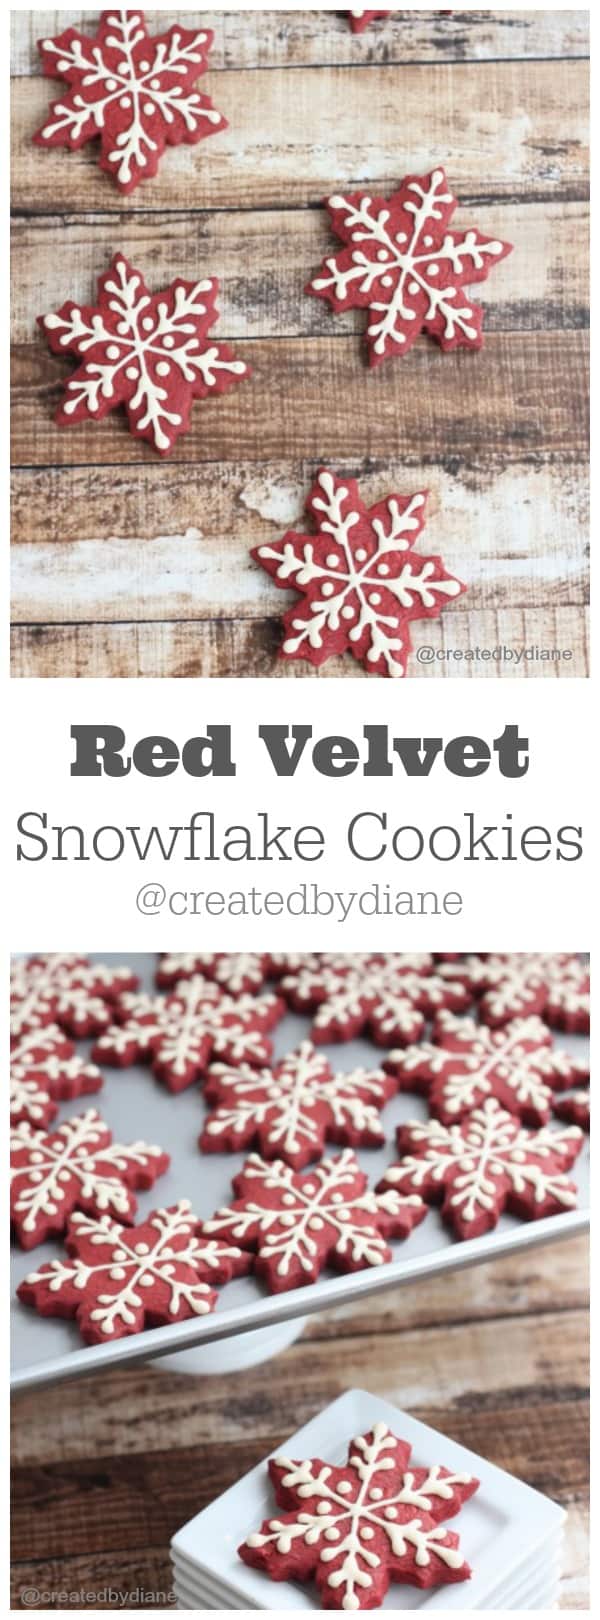 Red velvet Snowflake cookie recipe from @createdbydiane